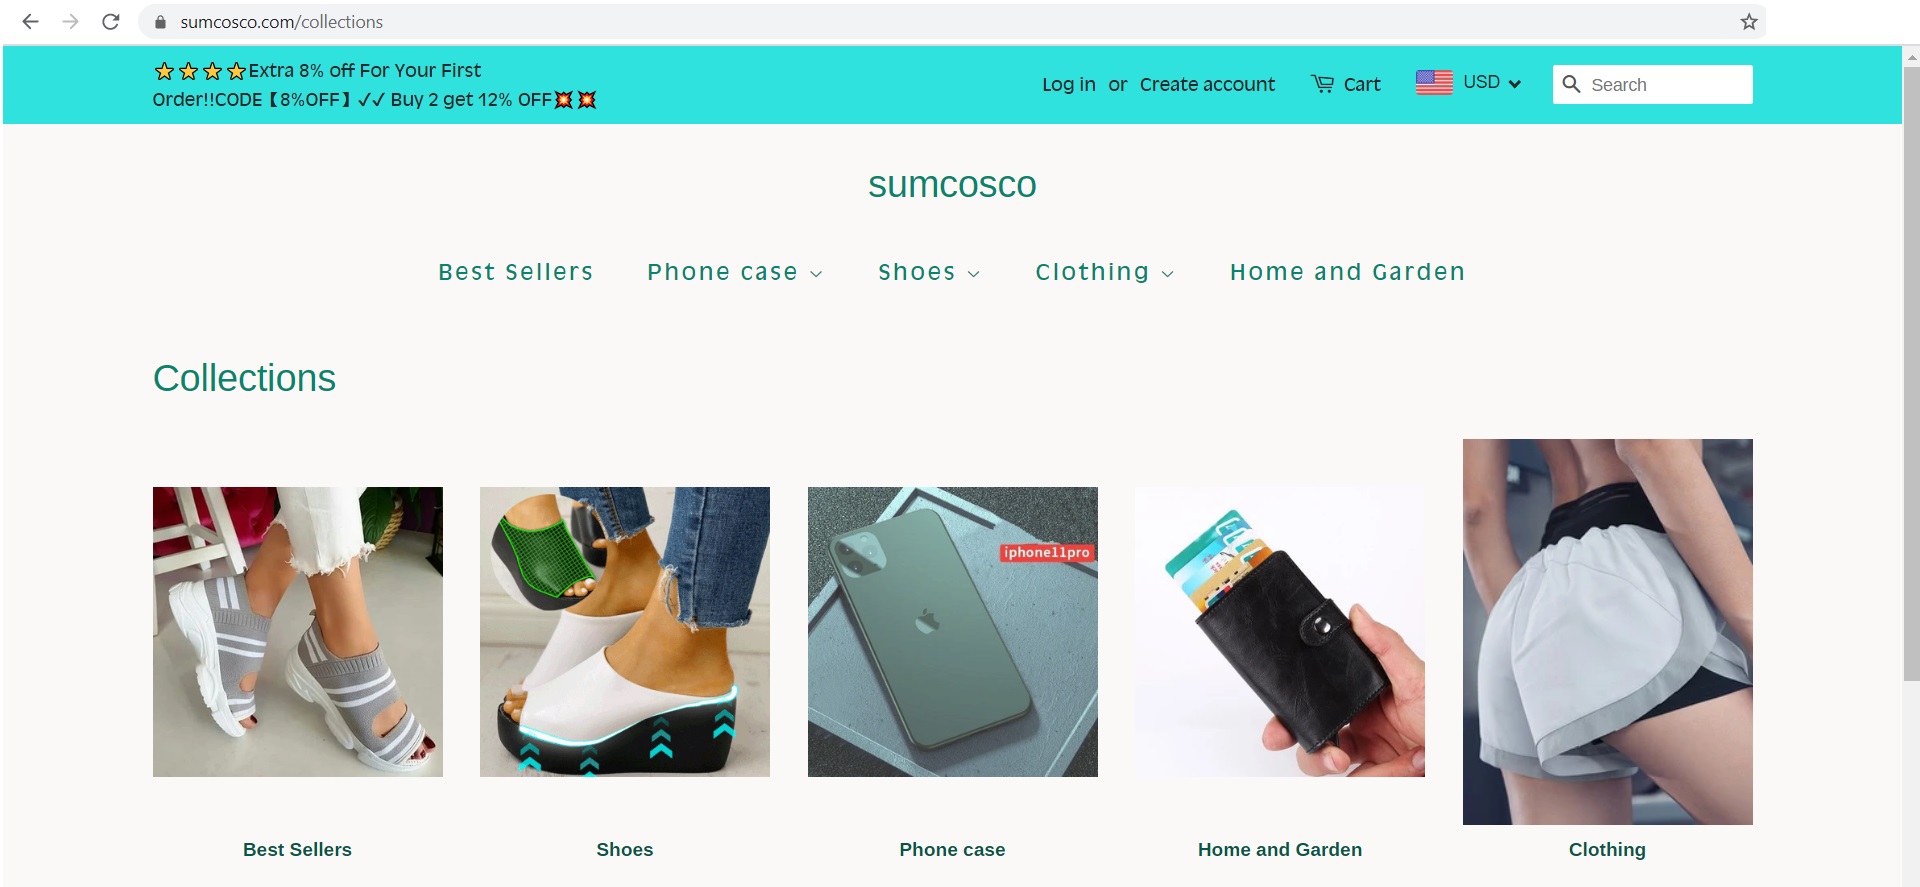 Sumcosco located at sumcosco.com